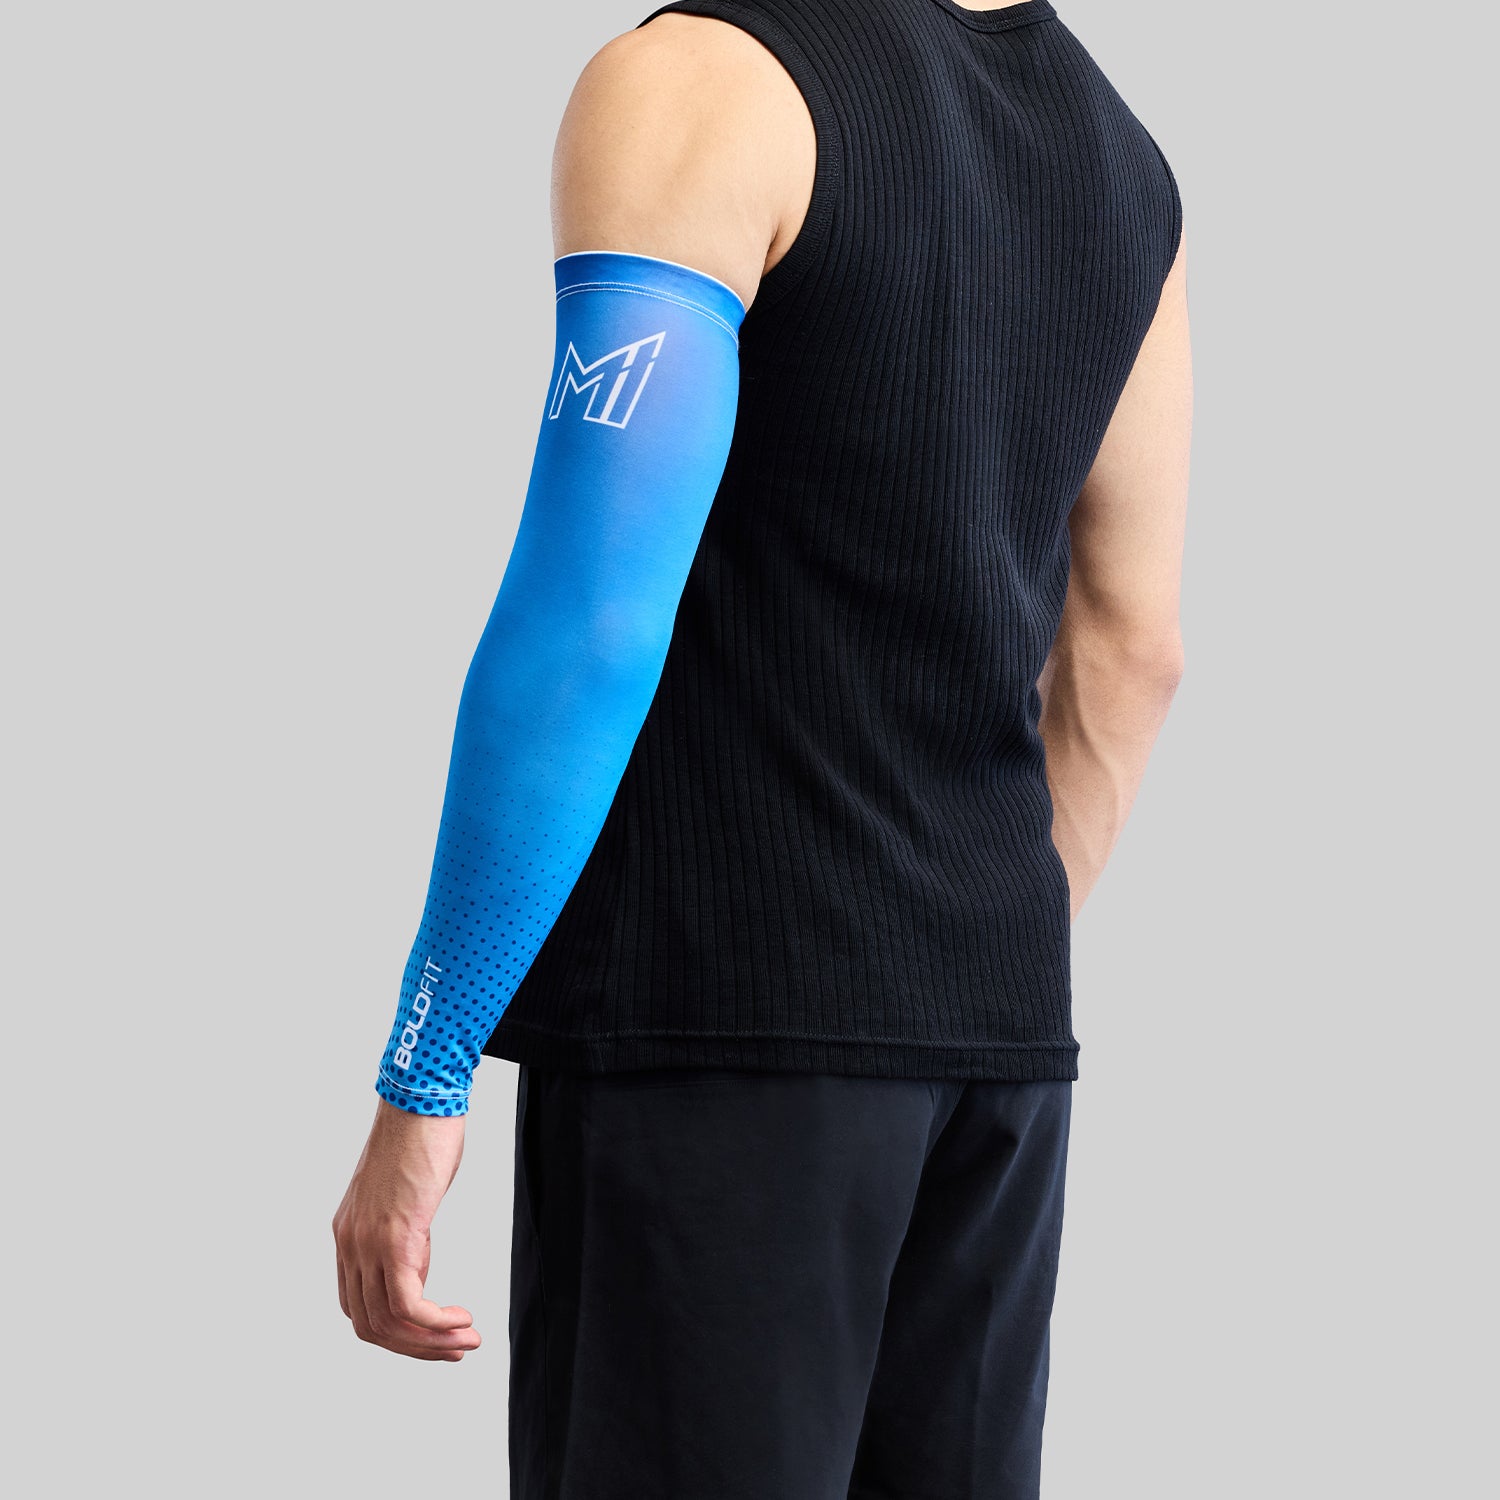 Official MI Merch - Arm Sleeve